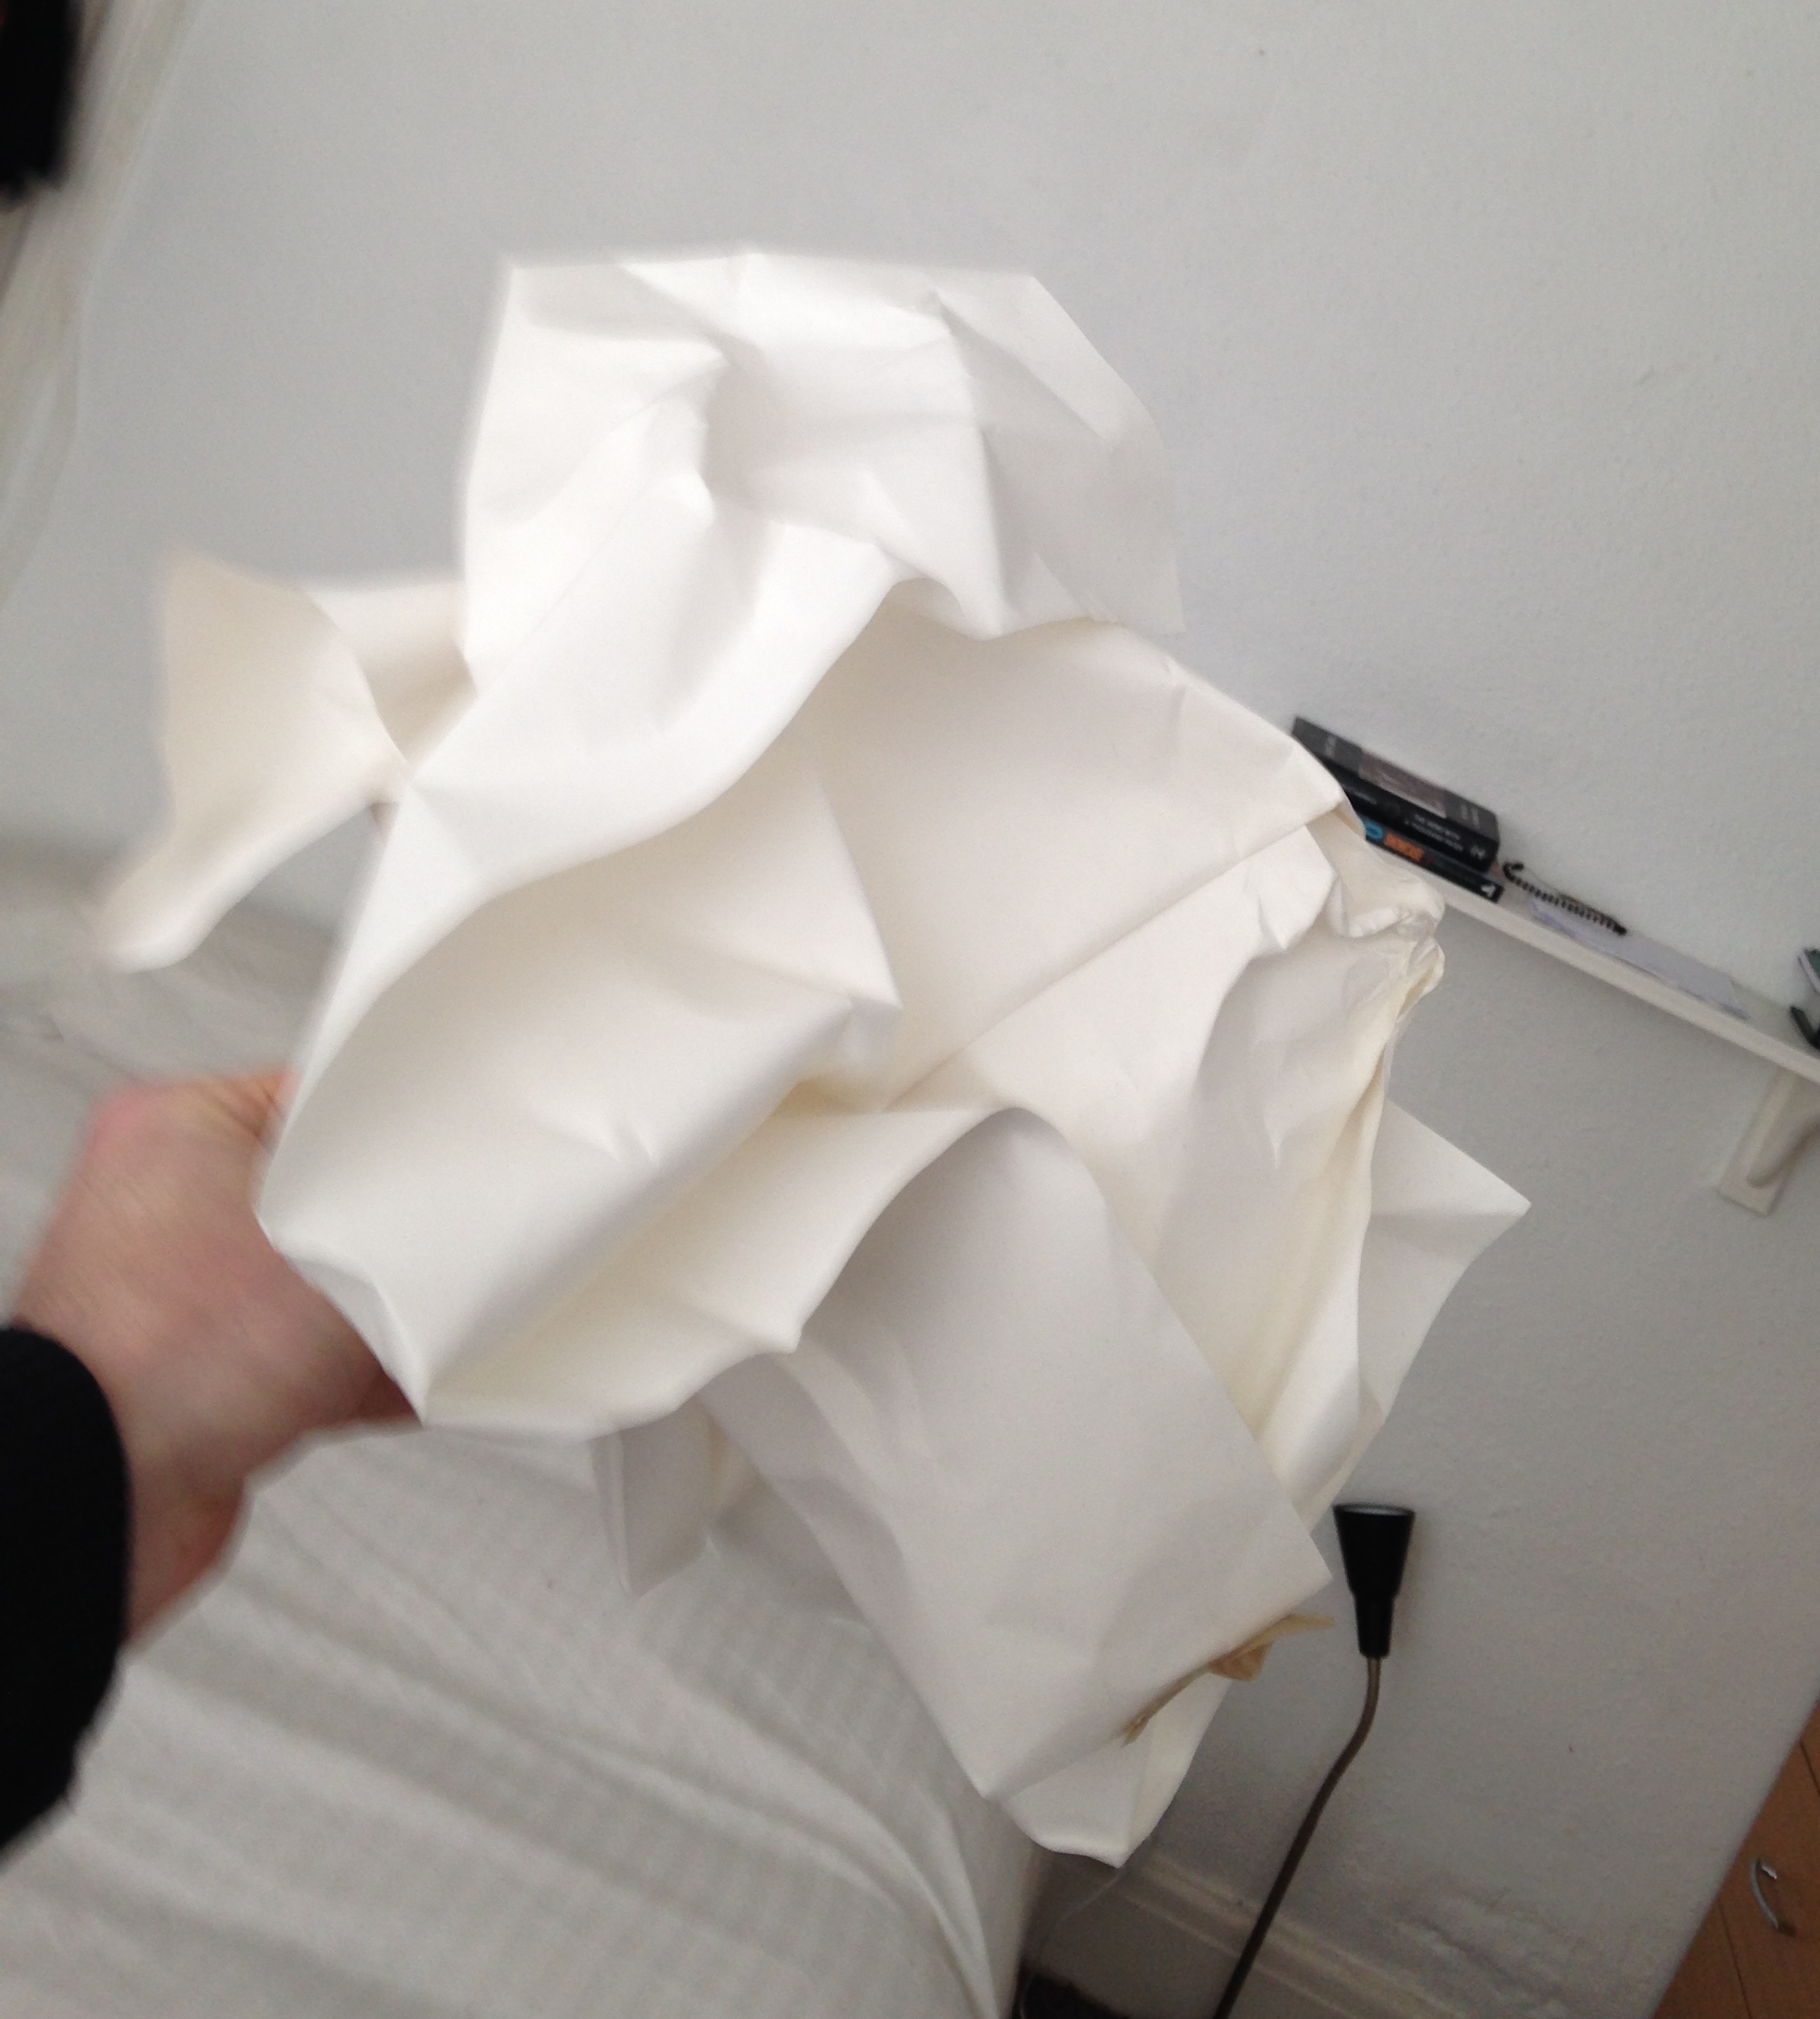 3D Scanning Crumpled Paper | cdelucamaker